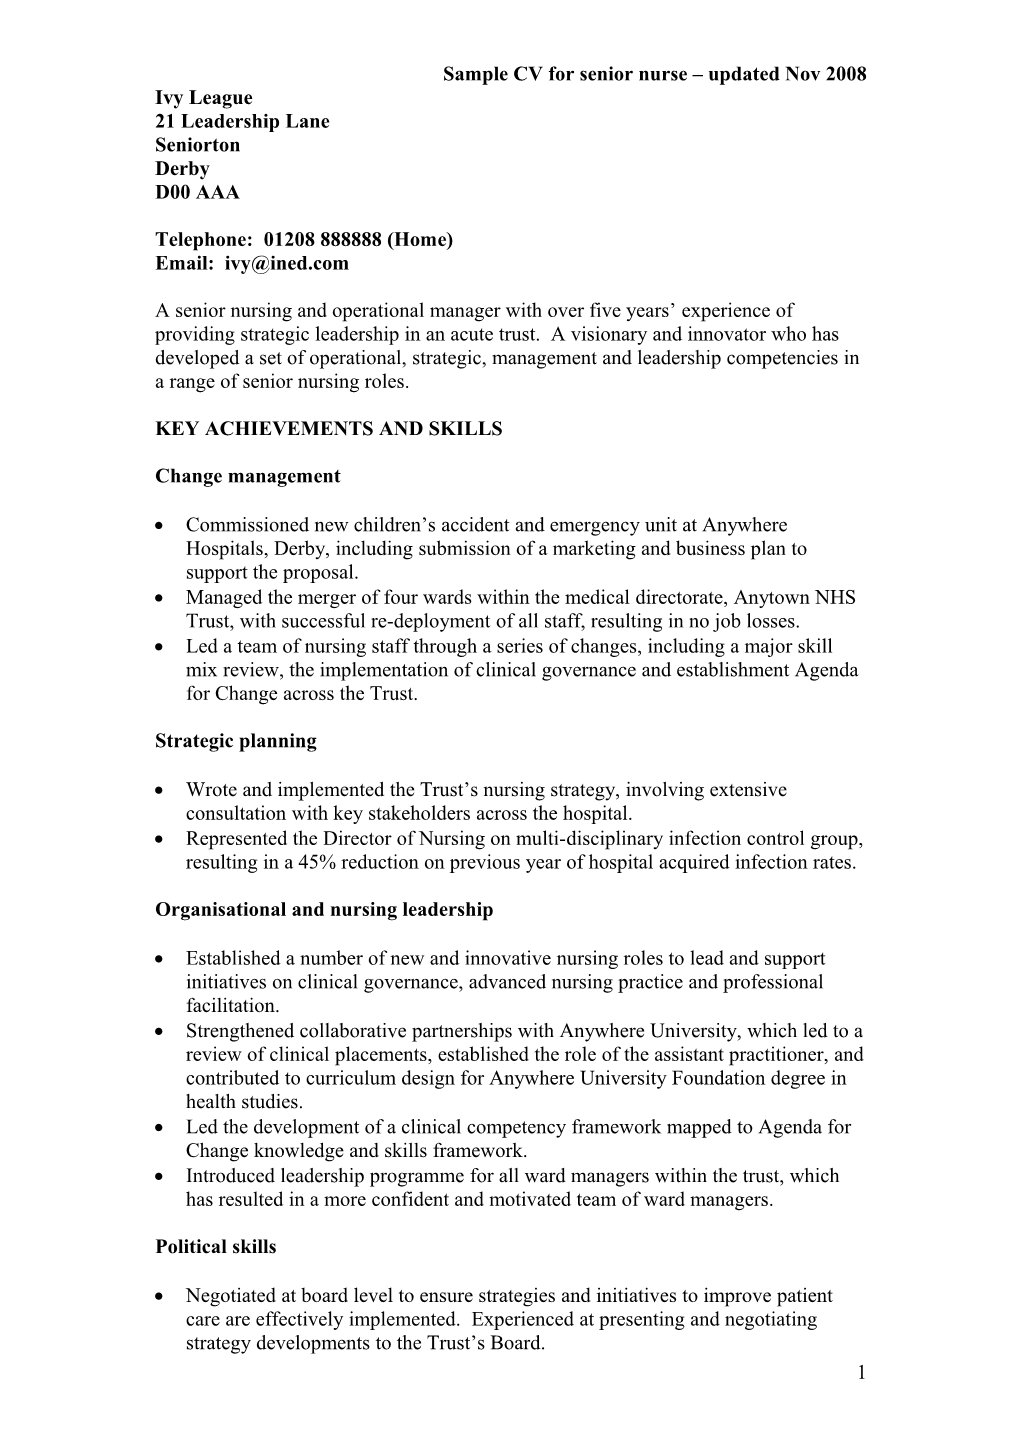 Sample CV for Senior Nurse Updated Nov 2008